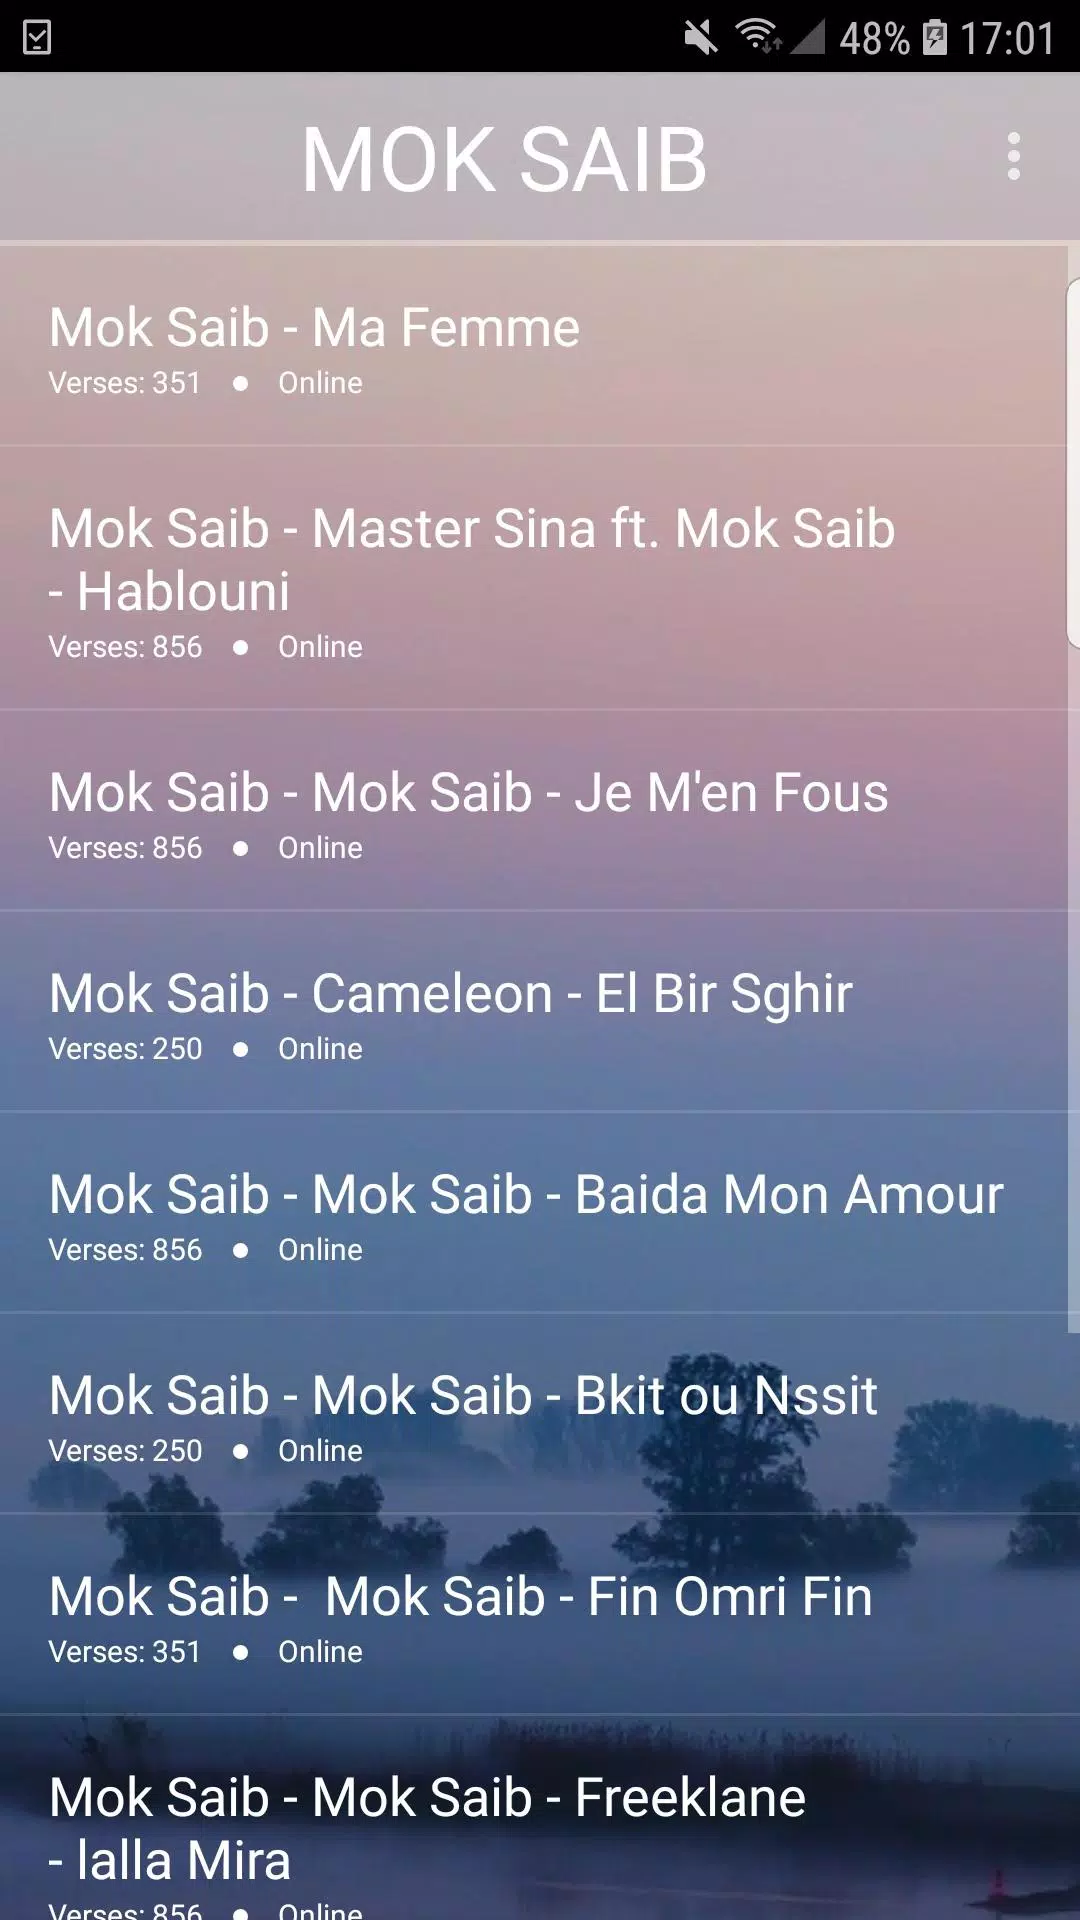 اغاني موك صايب mok saib MP3-2019‎ APK for Android Download